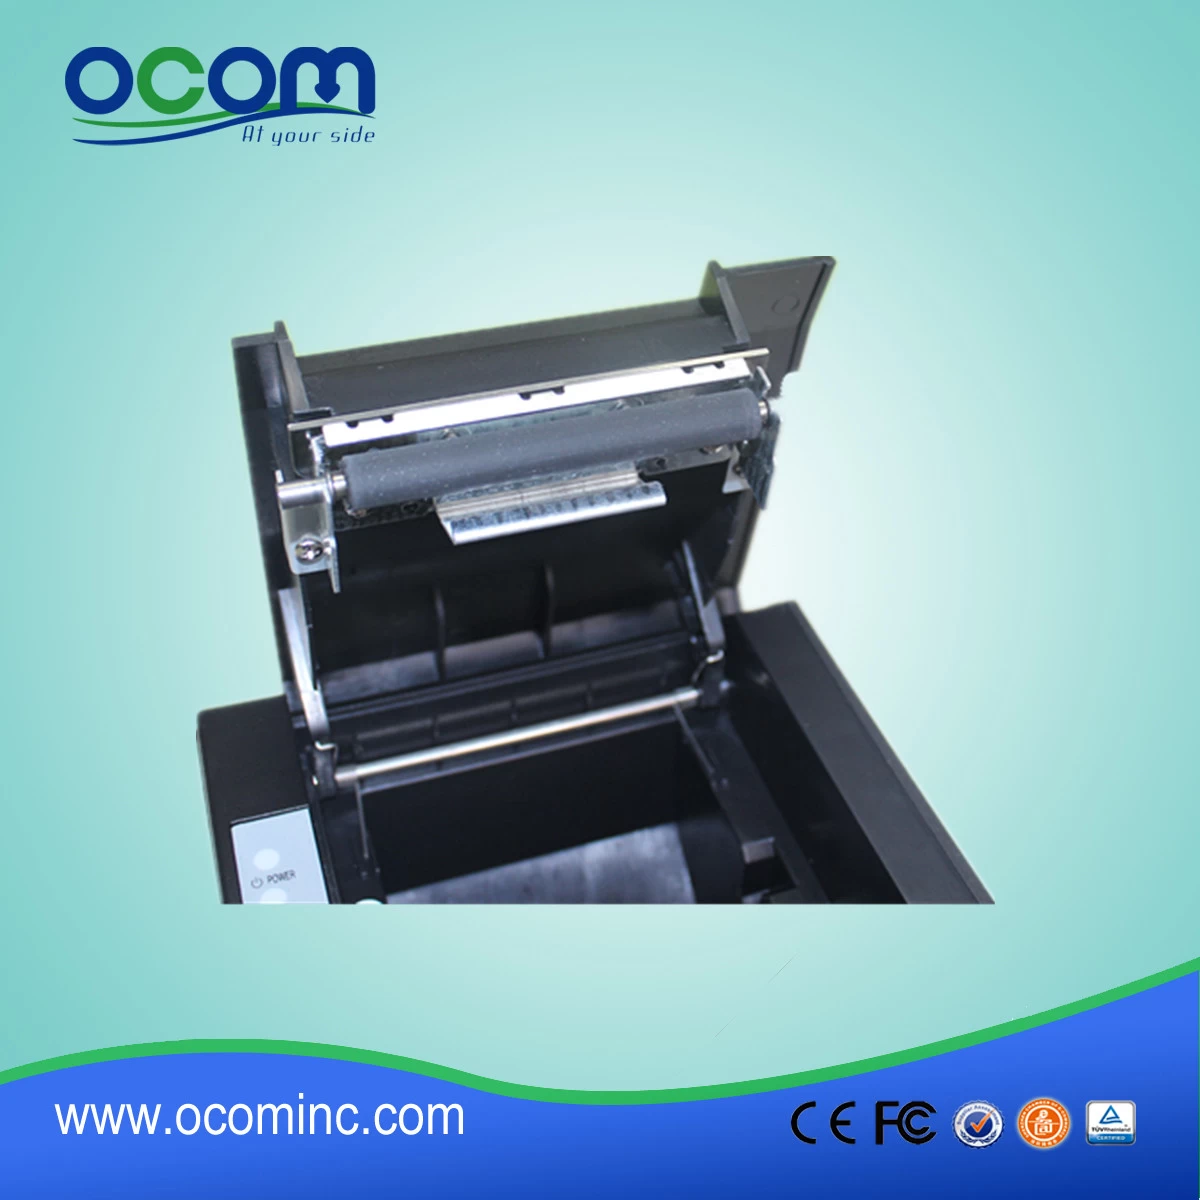 Re: 80mm desktop bluetooth thermal receipt printer-OCPP-88A-BUL